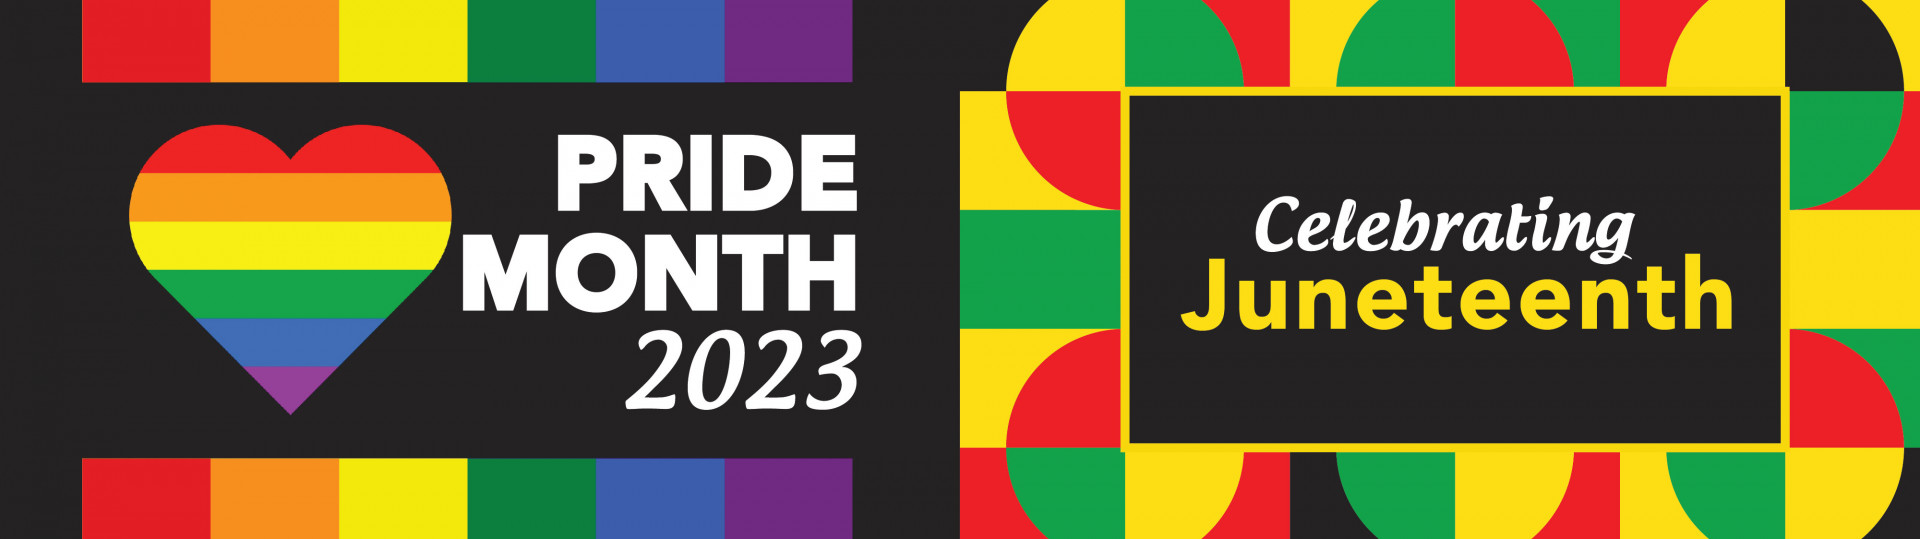 June Pride Month banner